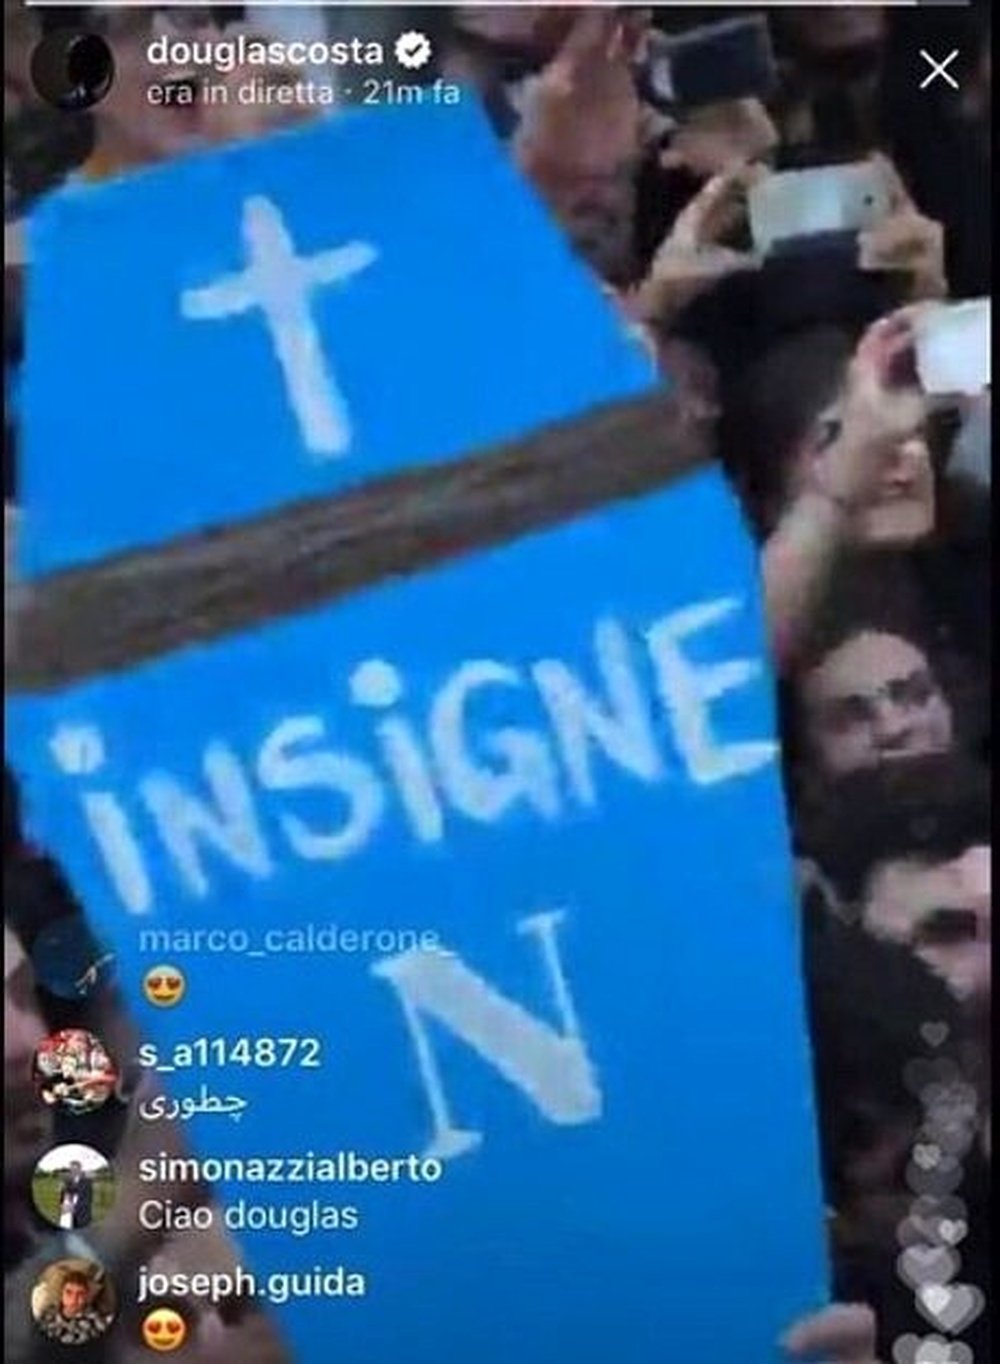 El extremo enfocó un ataúd con el nombre de Insigne. Instagram/DouglasCosta